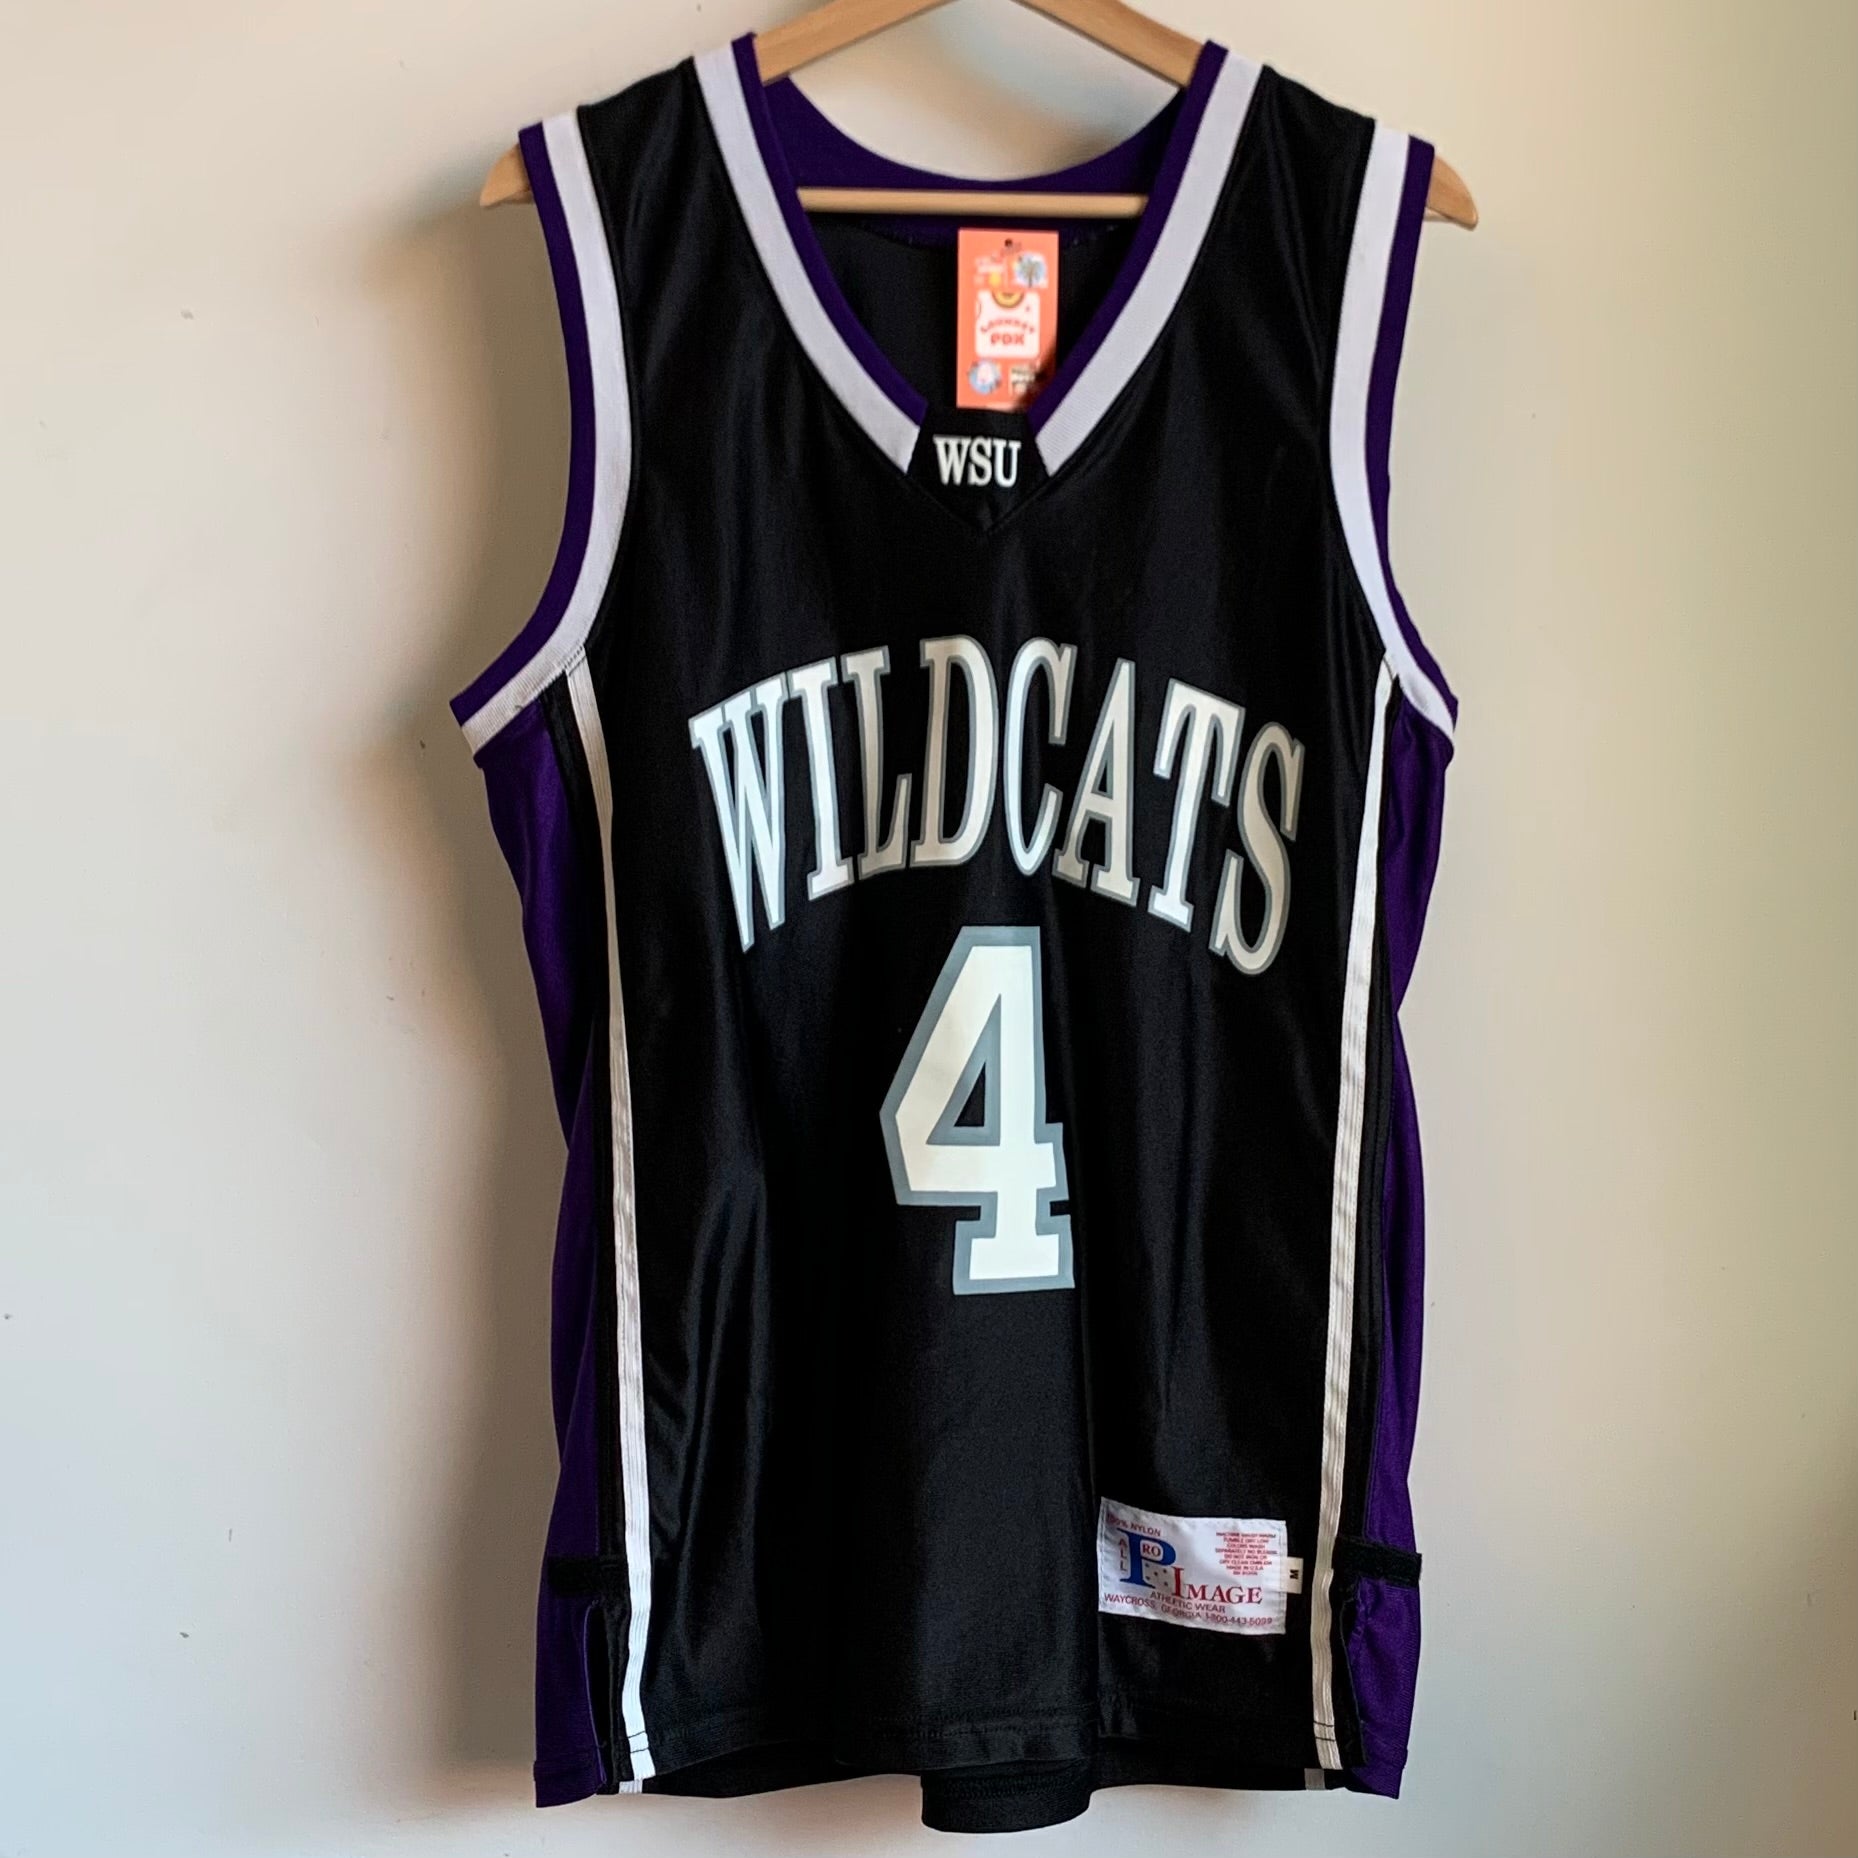 WSU Wildcats Basketball Jersey M